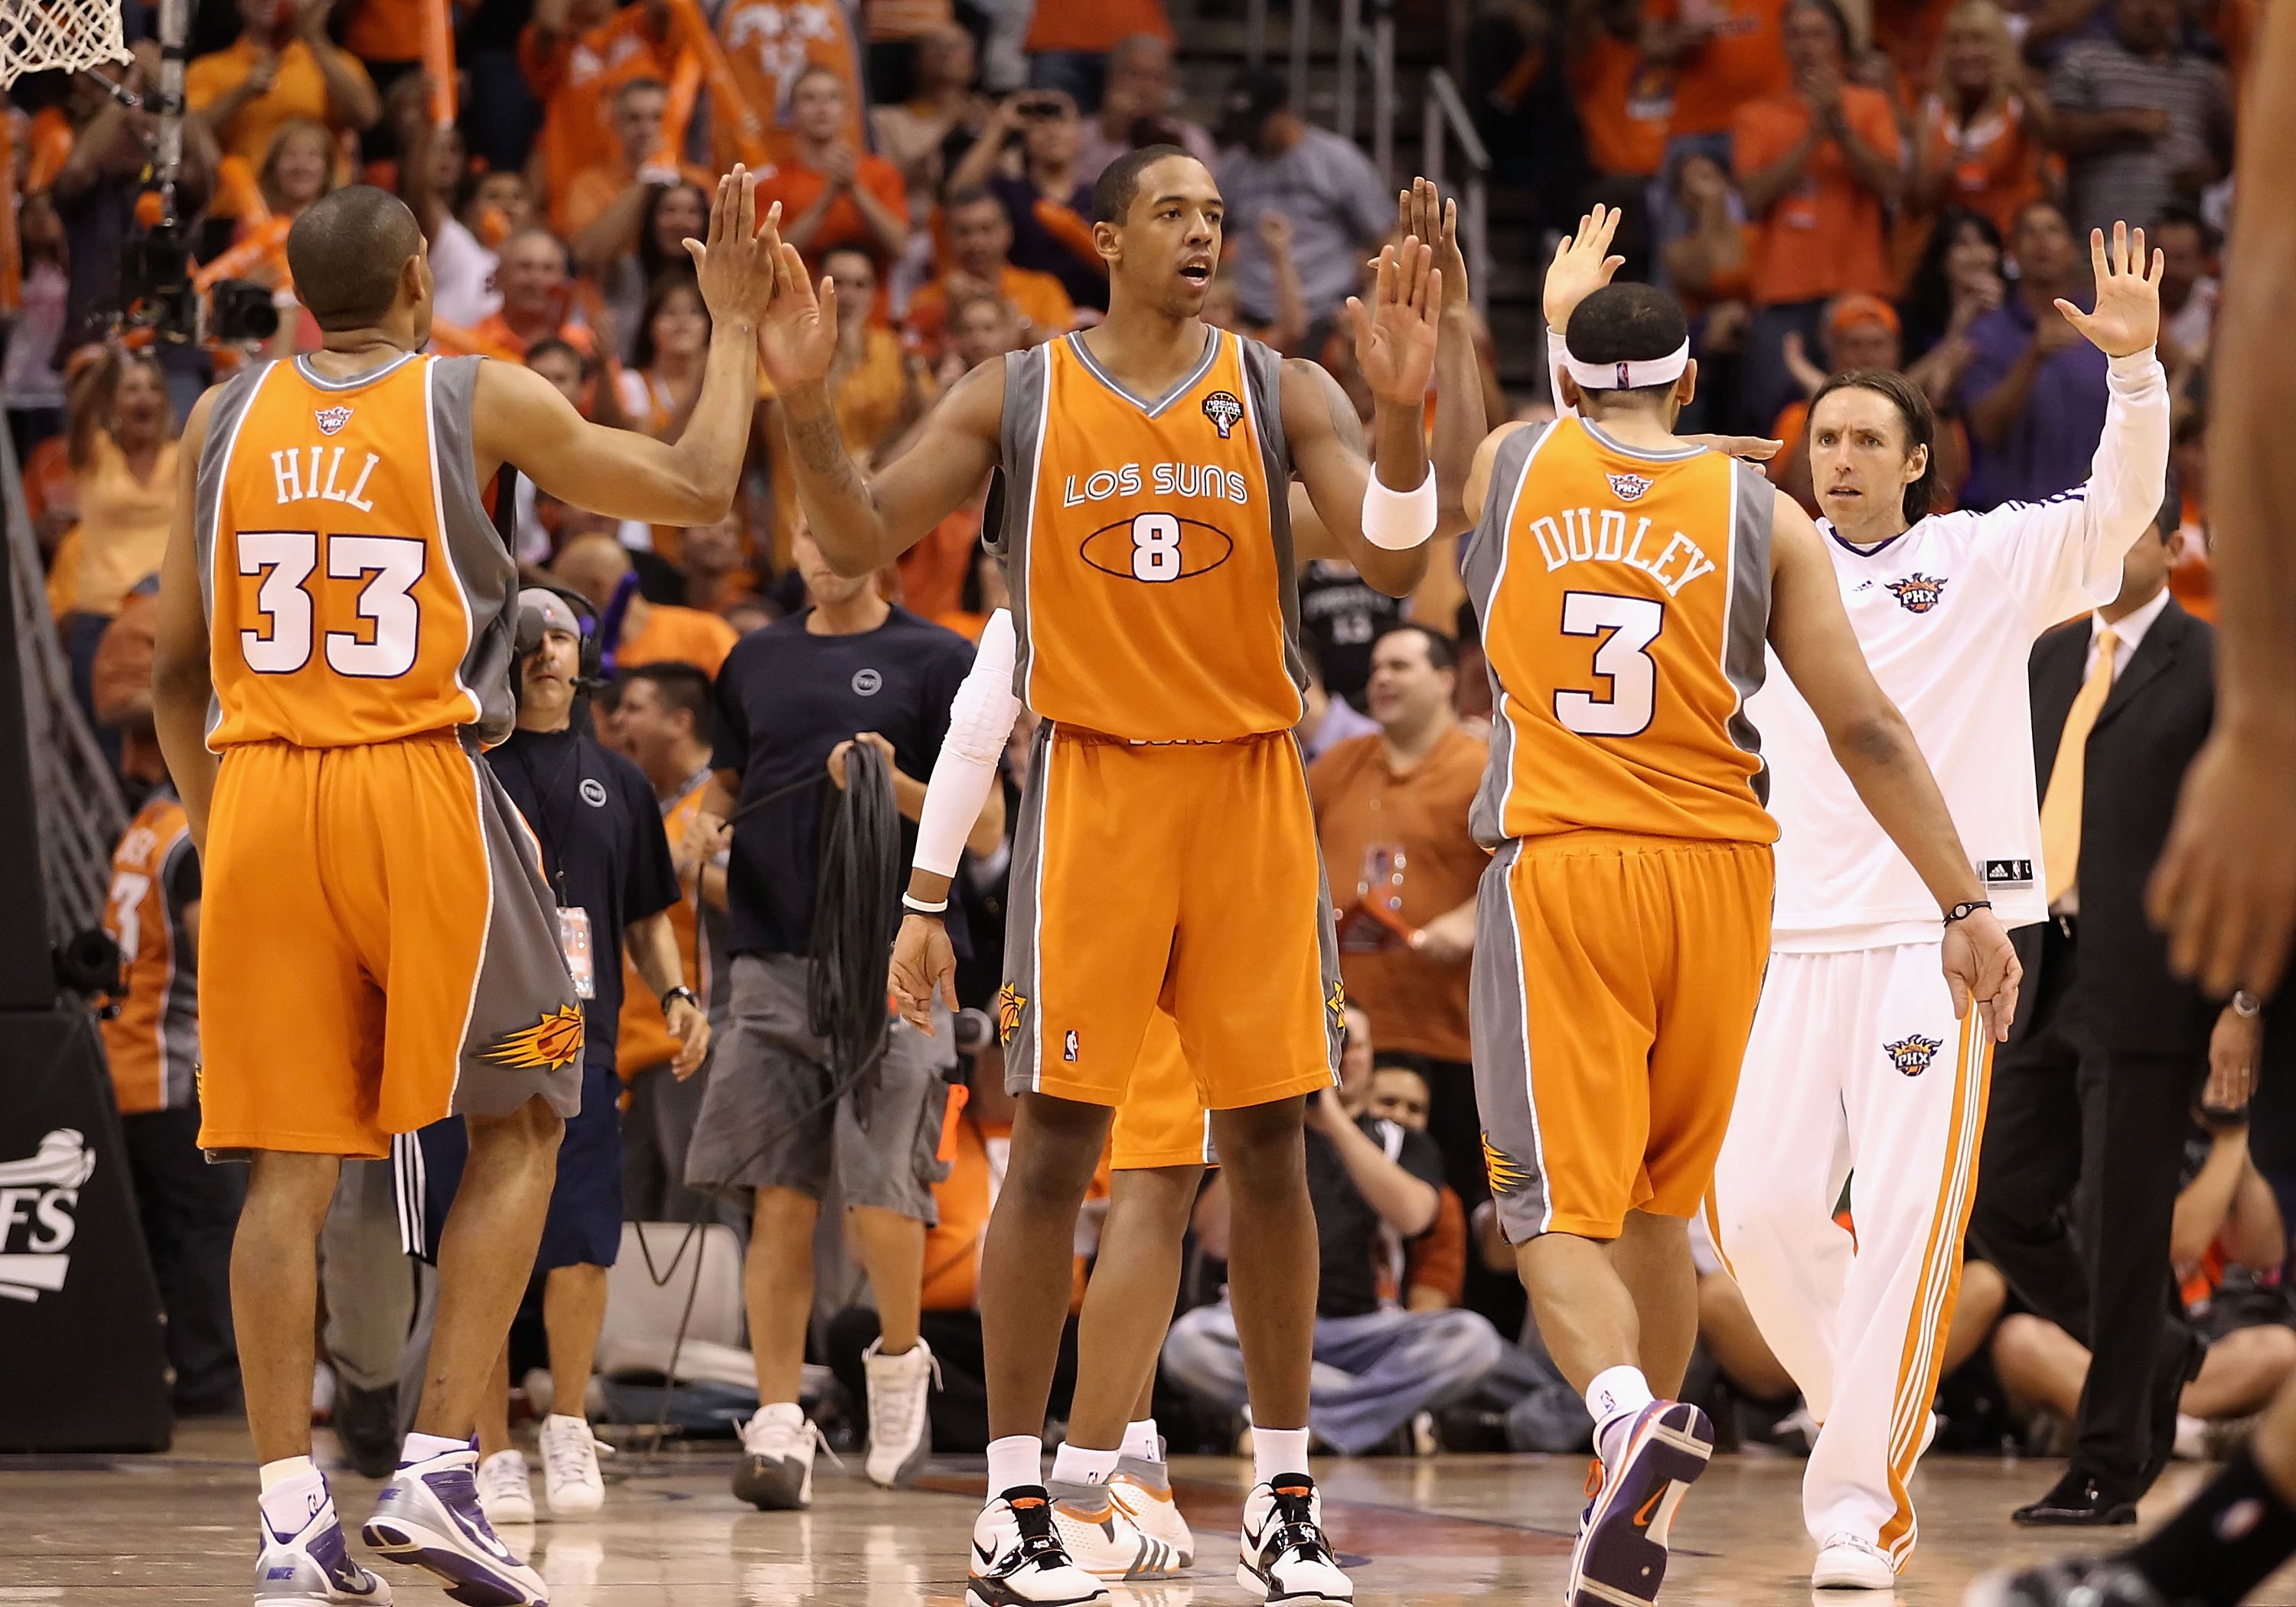 2008-09 Steve Nash Game Worn Phoenix Suns Jersey. Basketball